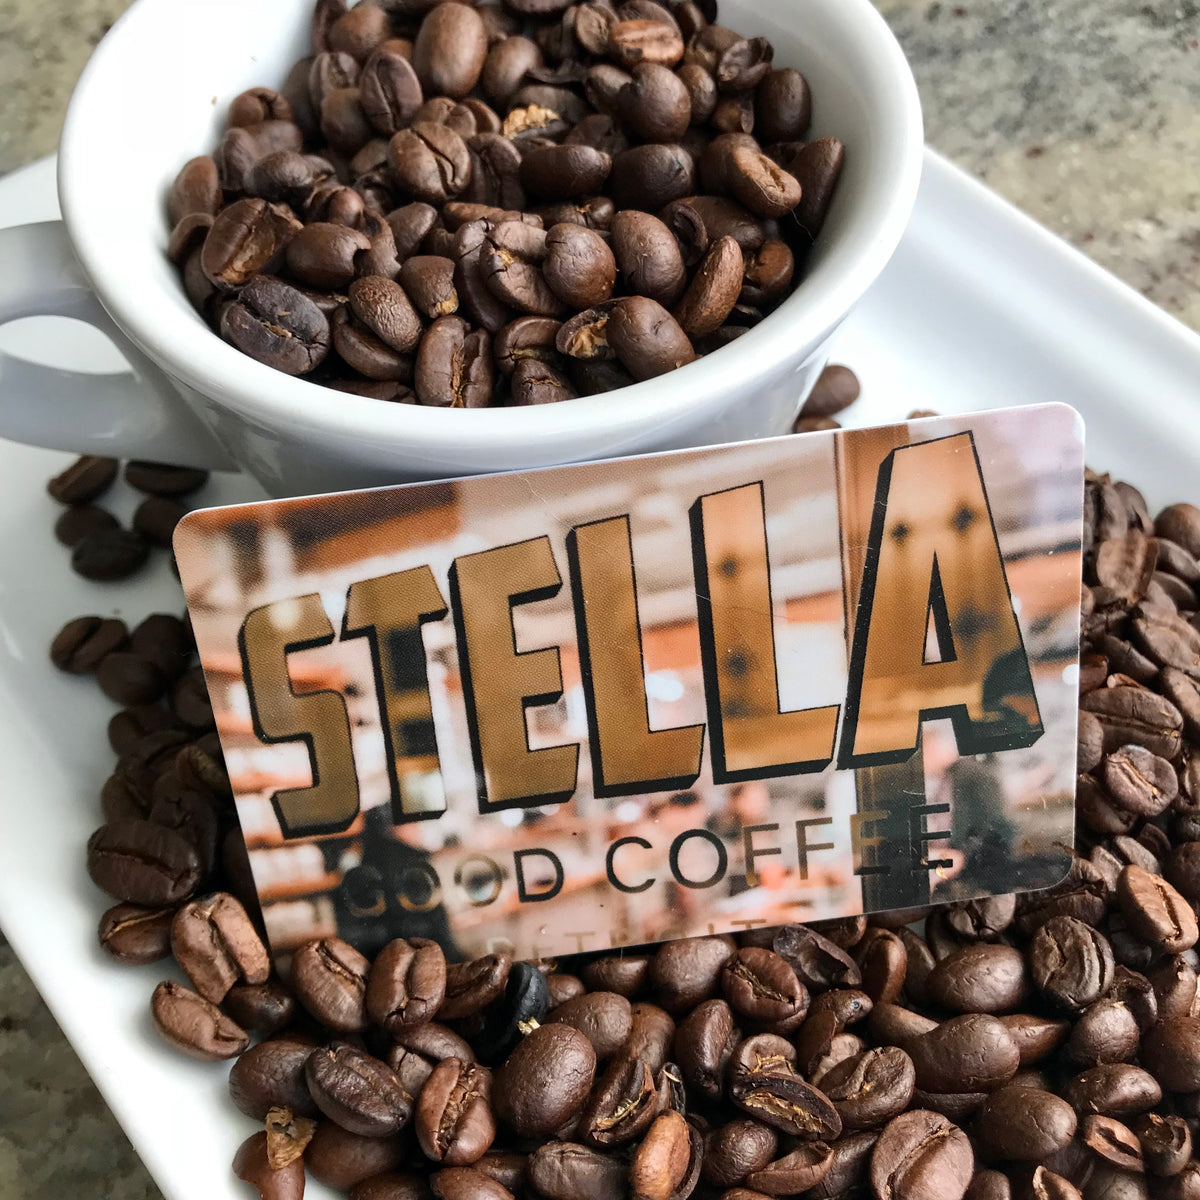 Stella Good Coffee Gift Card - $10    